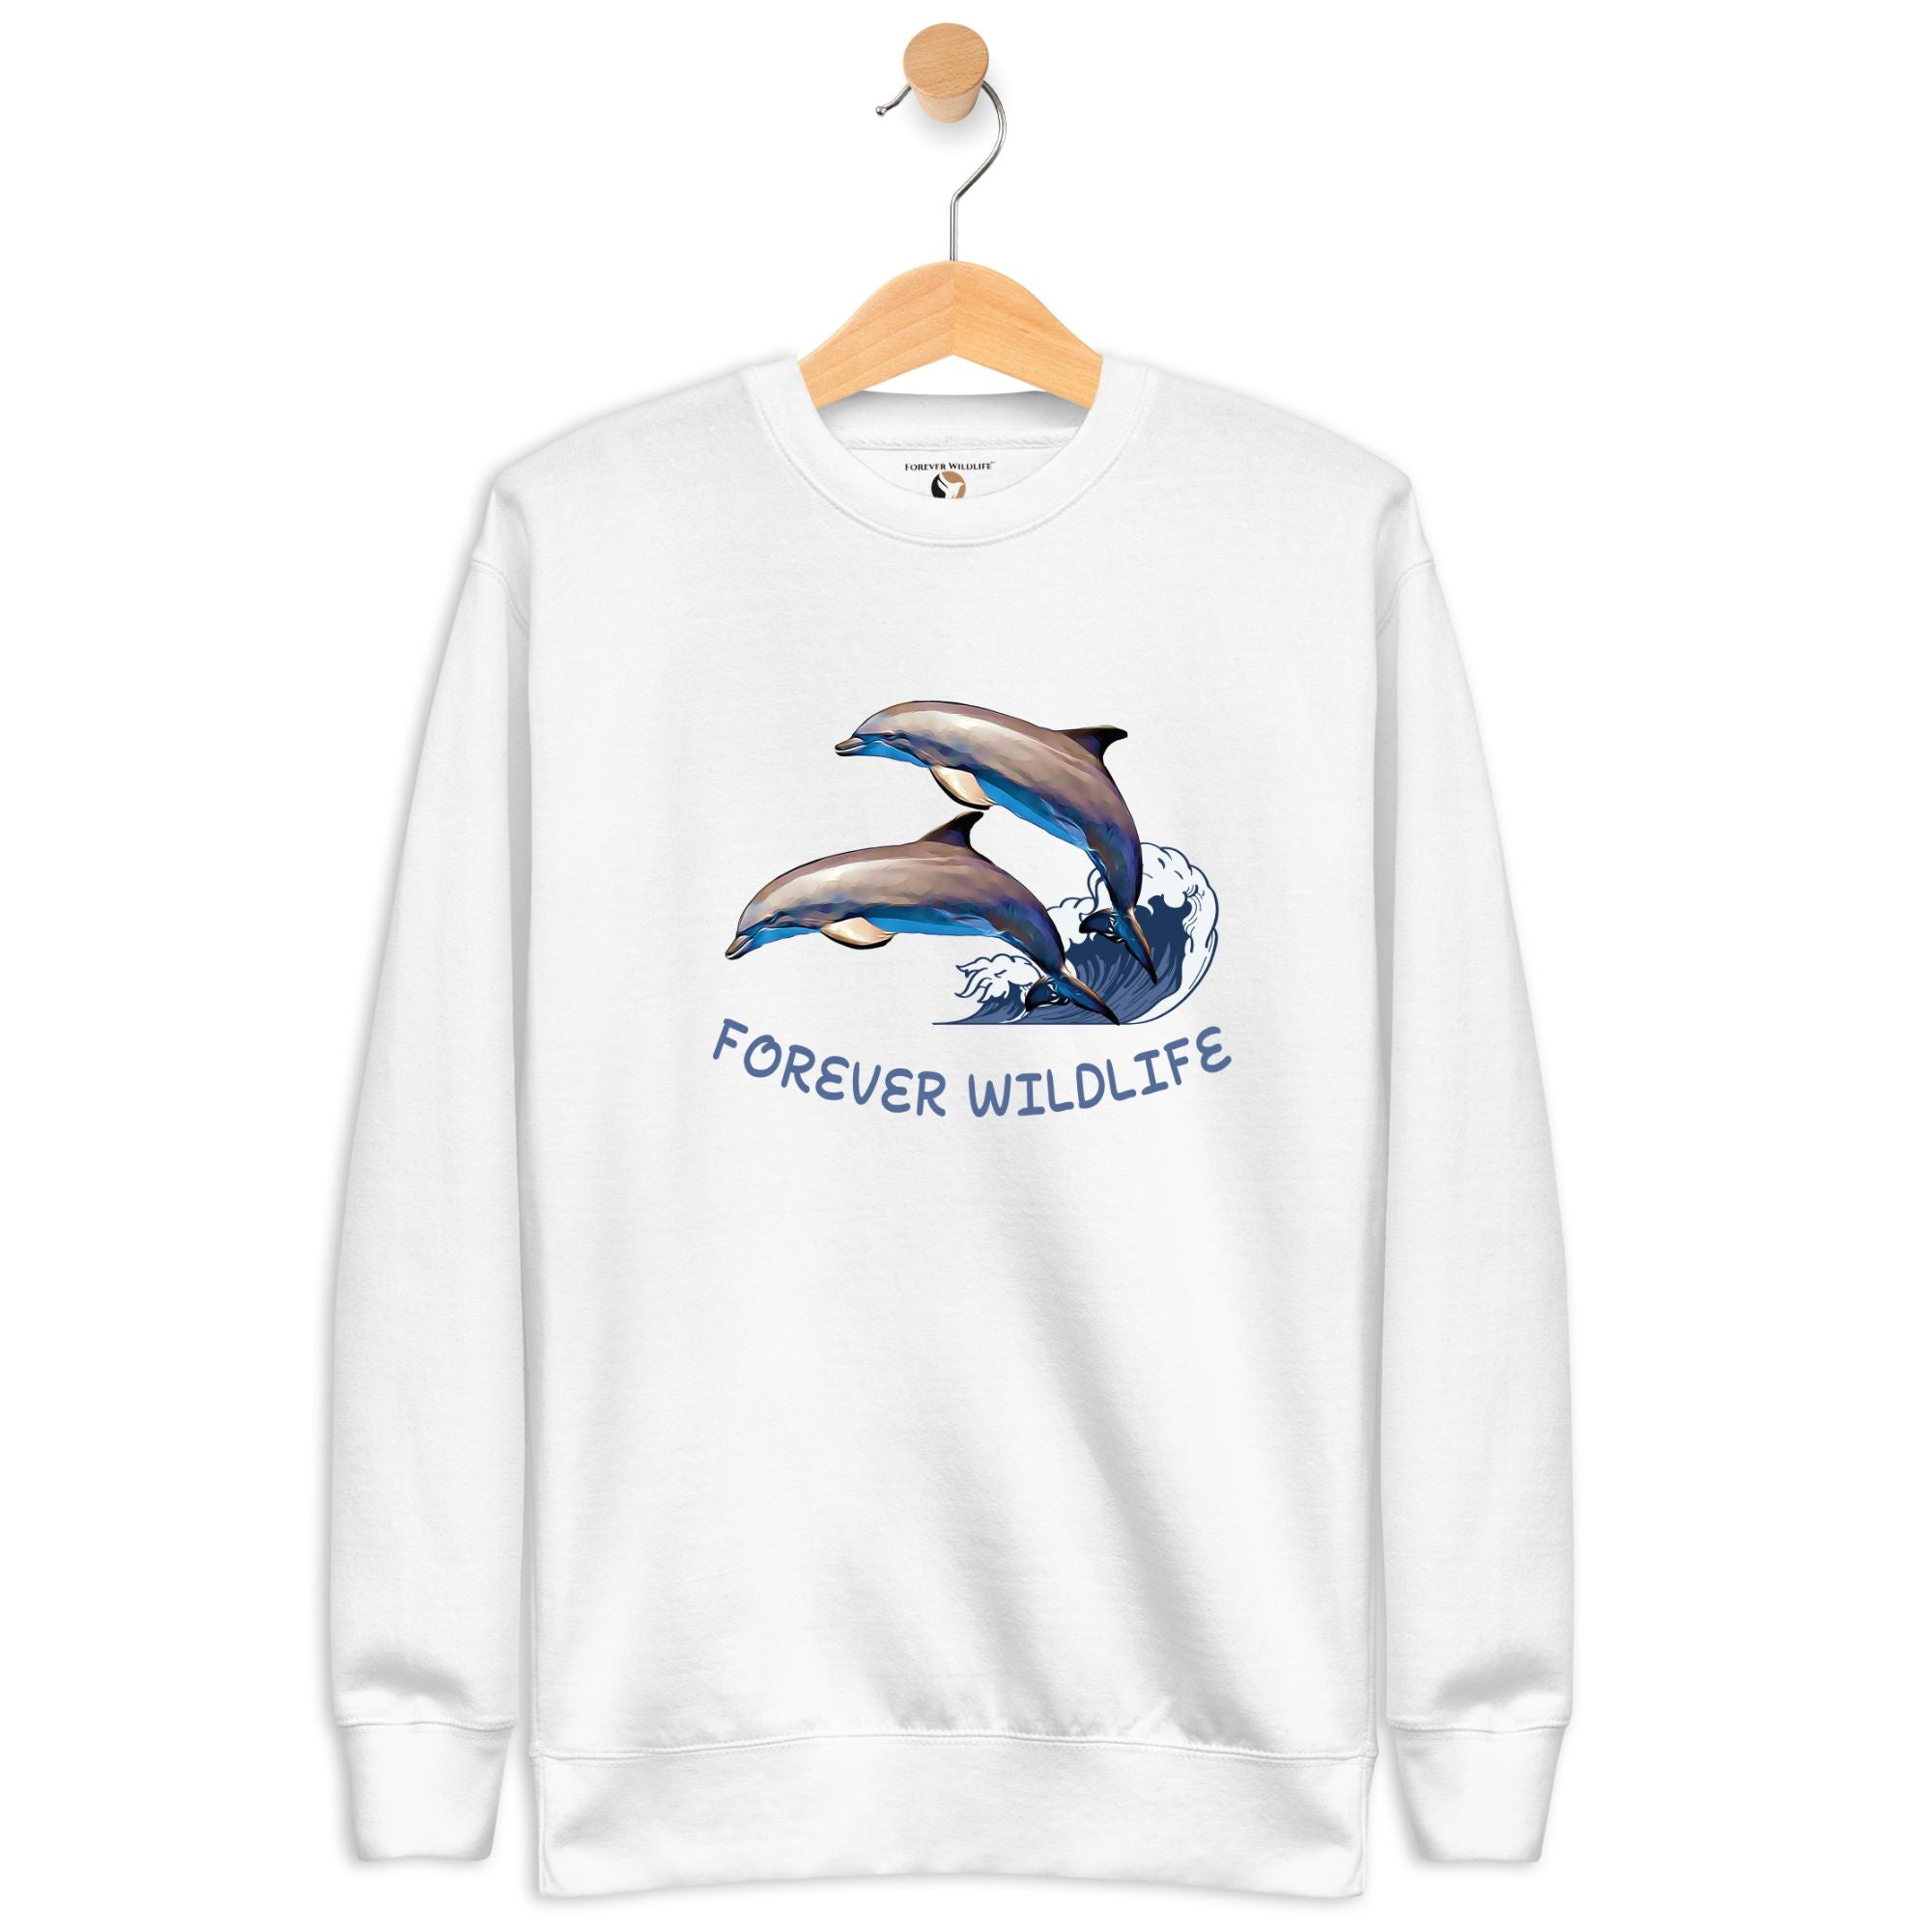 Dolphin Sweatshirt in White-Premium Wildlife Animal Inspiration Sweatshirt Design, part of Wildlife Sweatshirts & Clothing from Forever Wildlife.